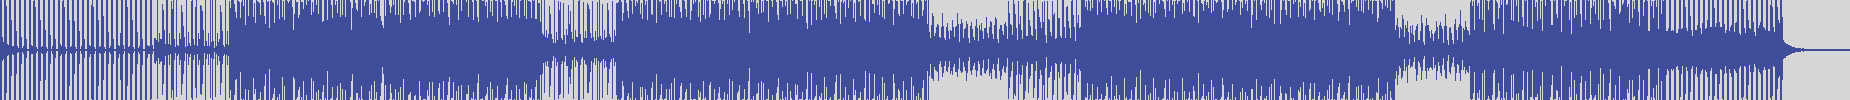 nf_boyz_records [NFY074] Quantic Rhythms - Tibetan Trance [Tech Mix] audio wave form